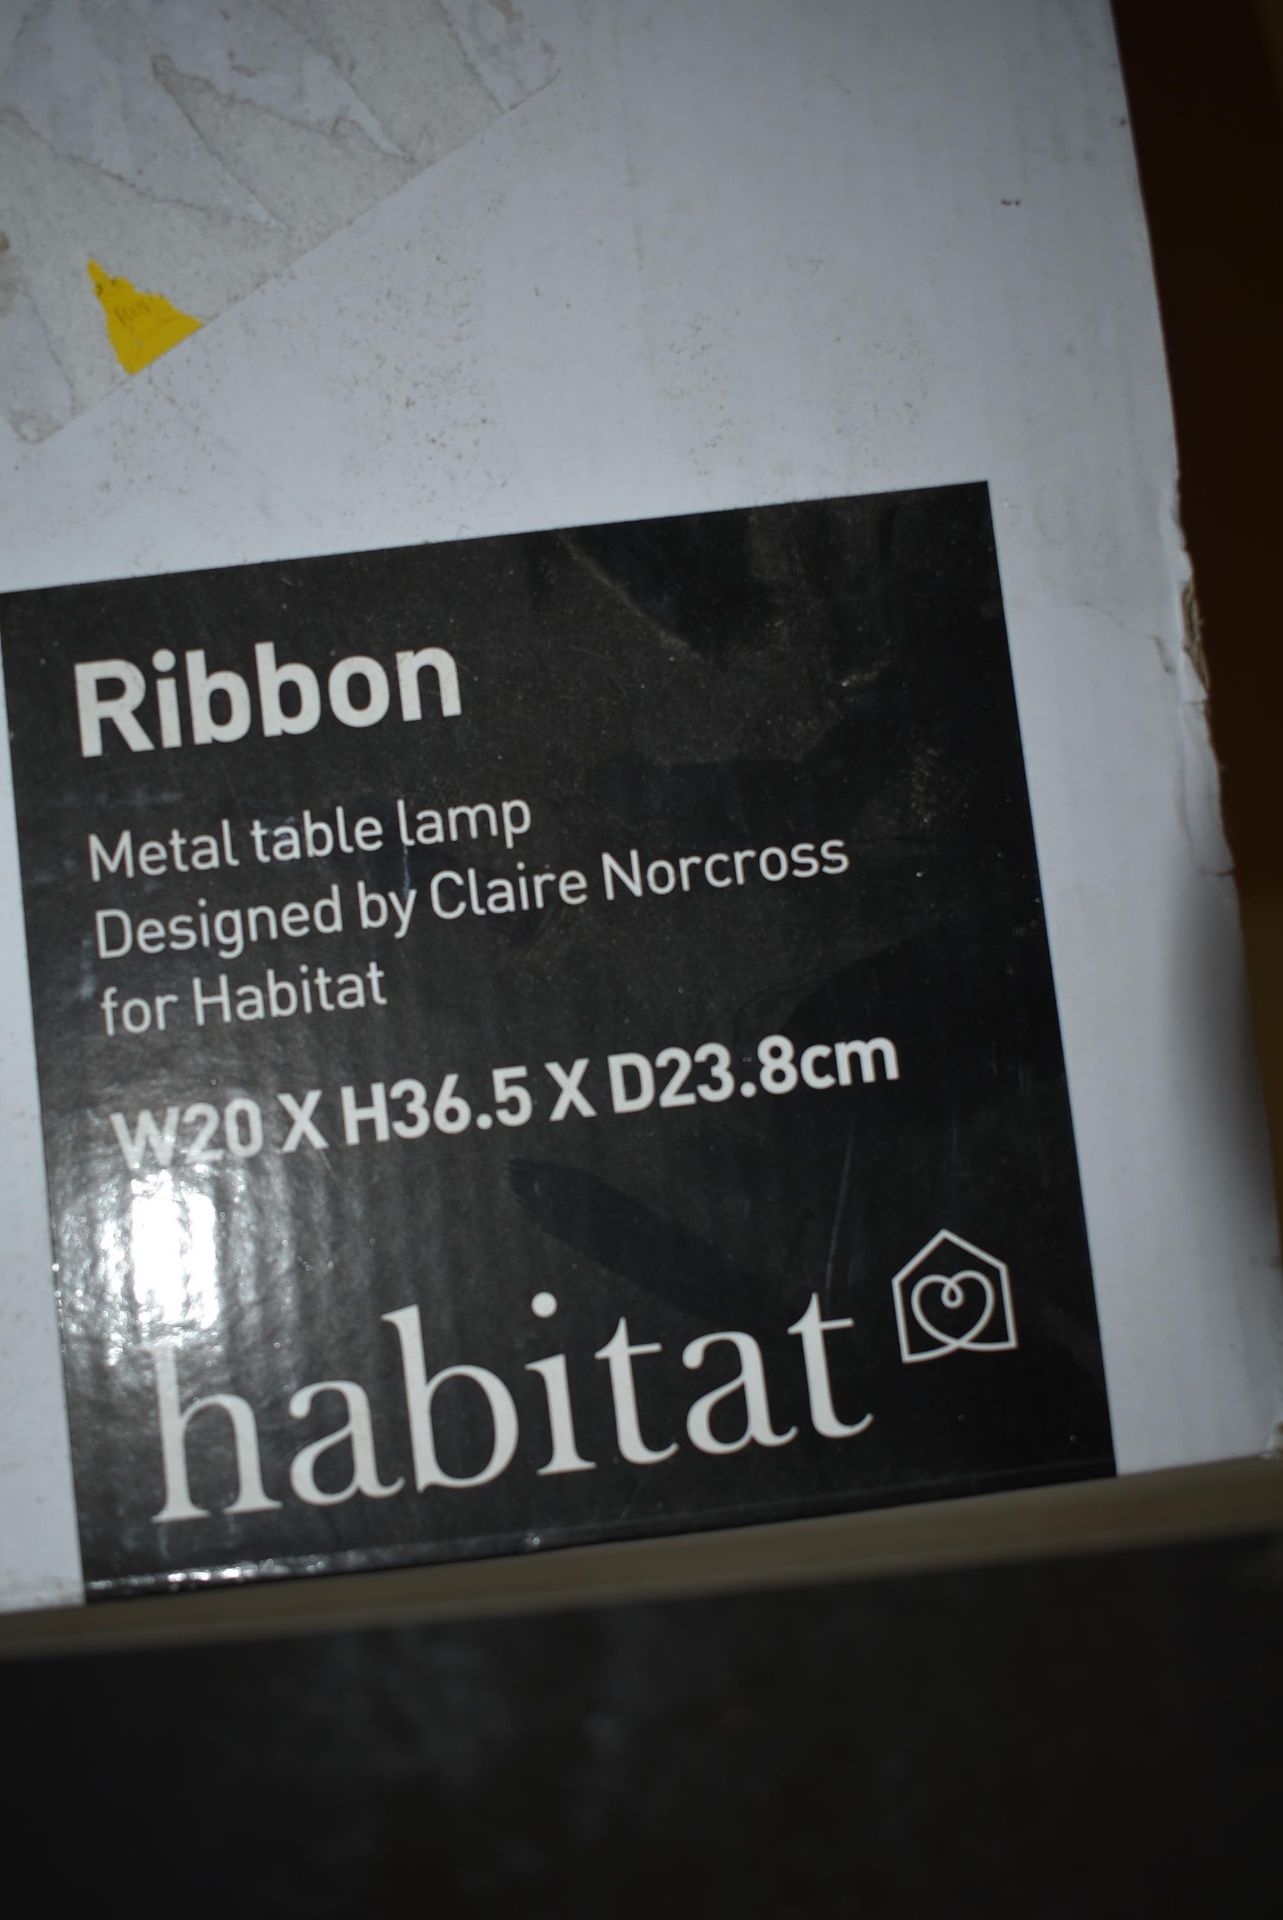 Habitat Ribbon Table Lamp - Image 4 of 4